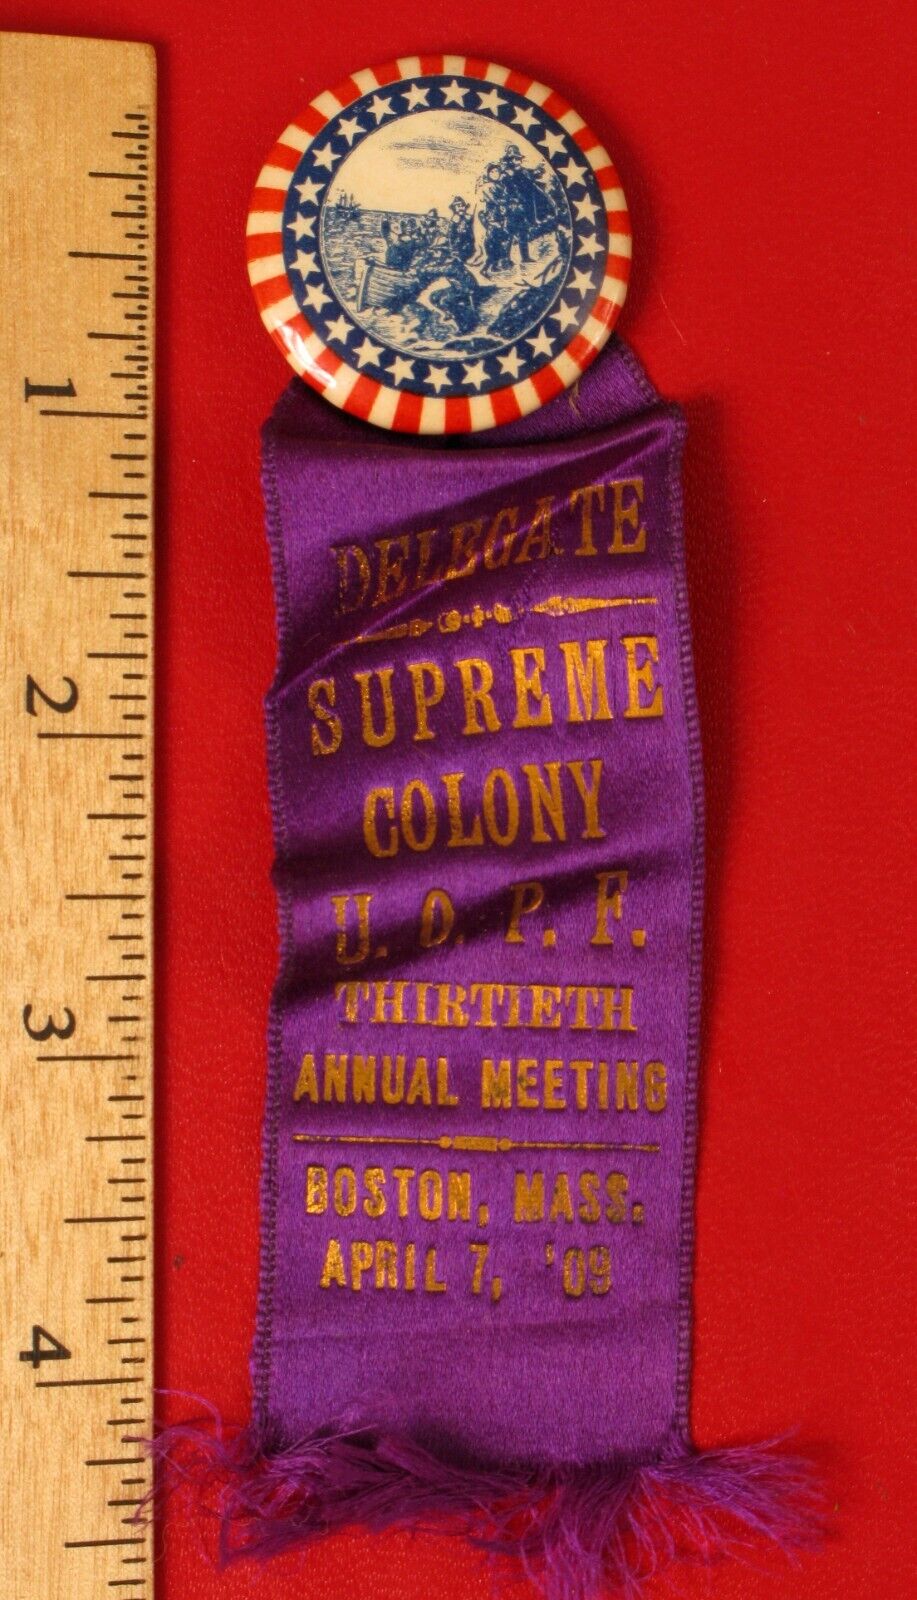 VINTAGE 1909 BUTTL RIBBON UOPF SUPREME COLONY 13th ANNUAL MEETING BOSTON  